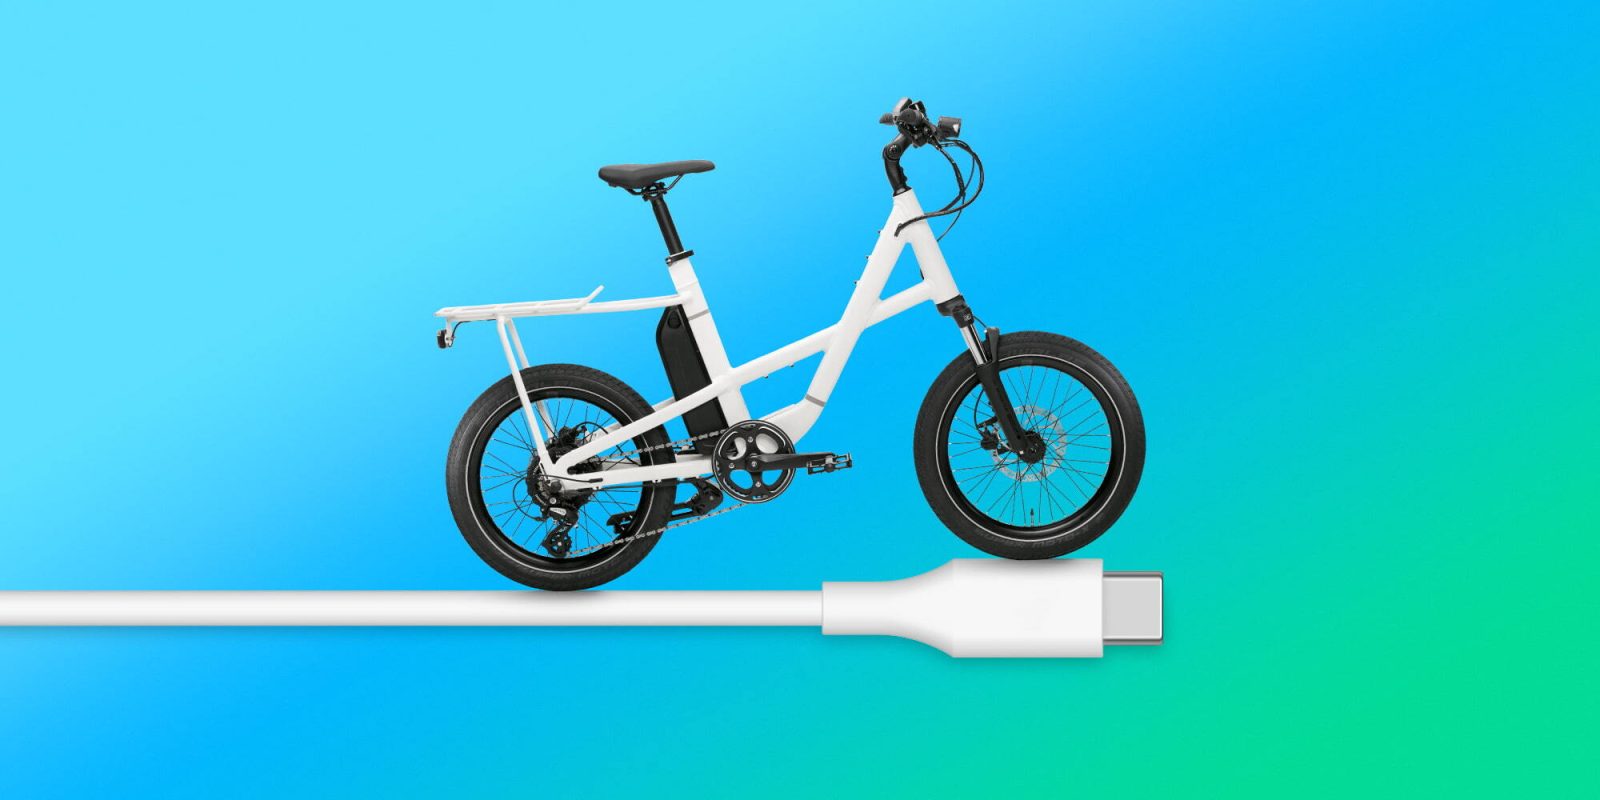 usb-c electric bike charger